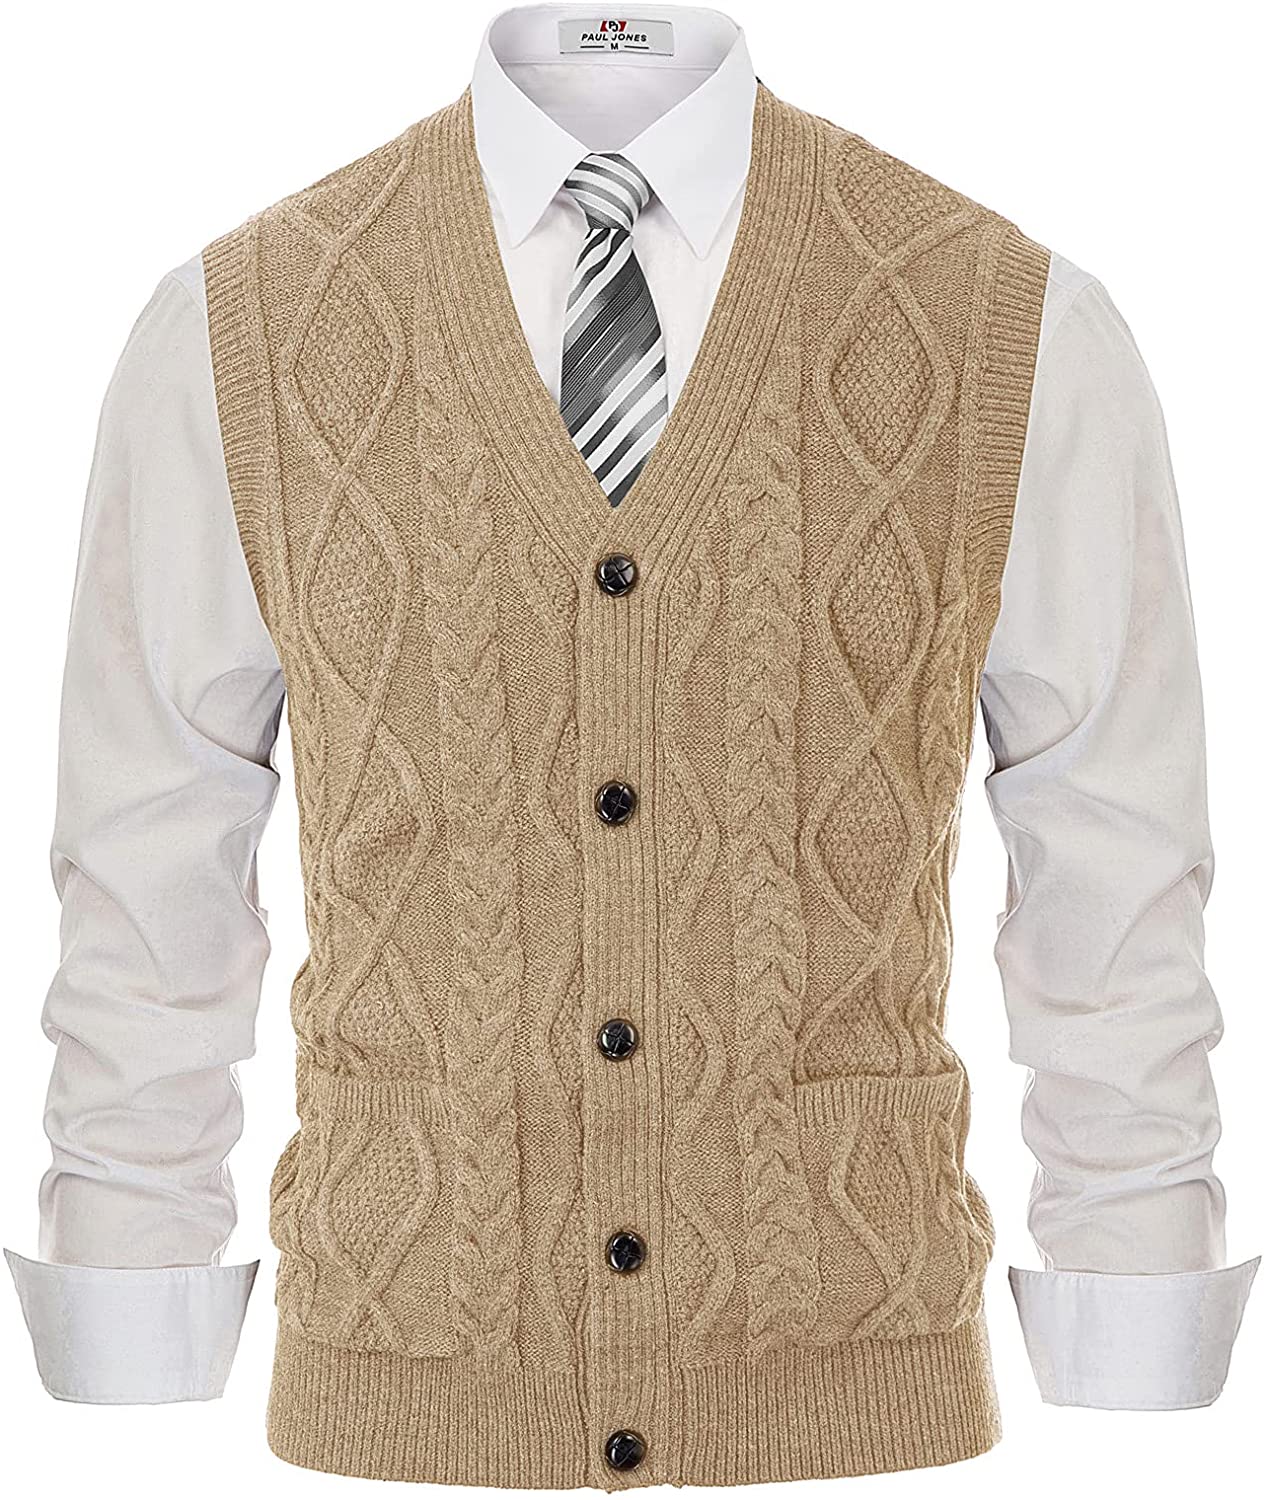 PJ PAUL JONES Cable Knit Sweater Vest Button Down V Neck Slim Fit Sweater V | eBay